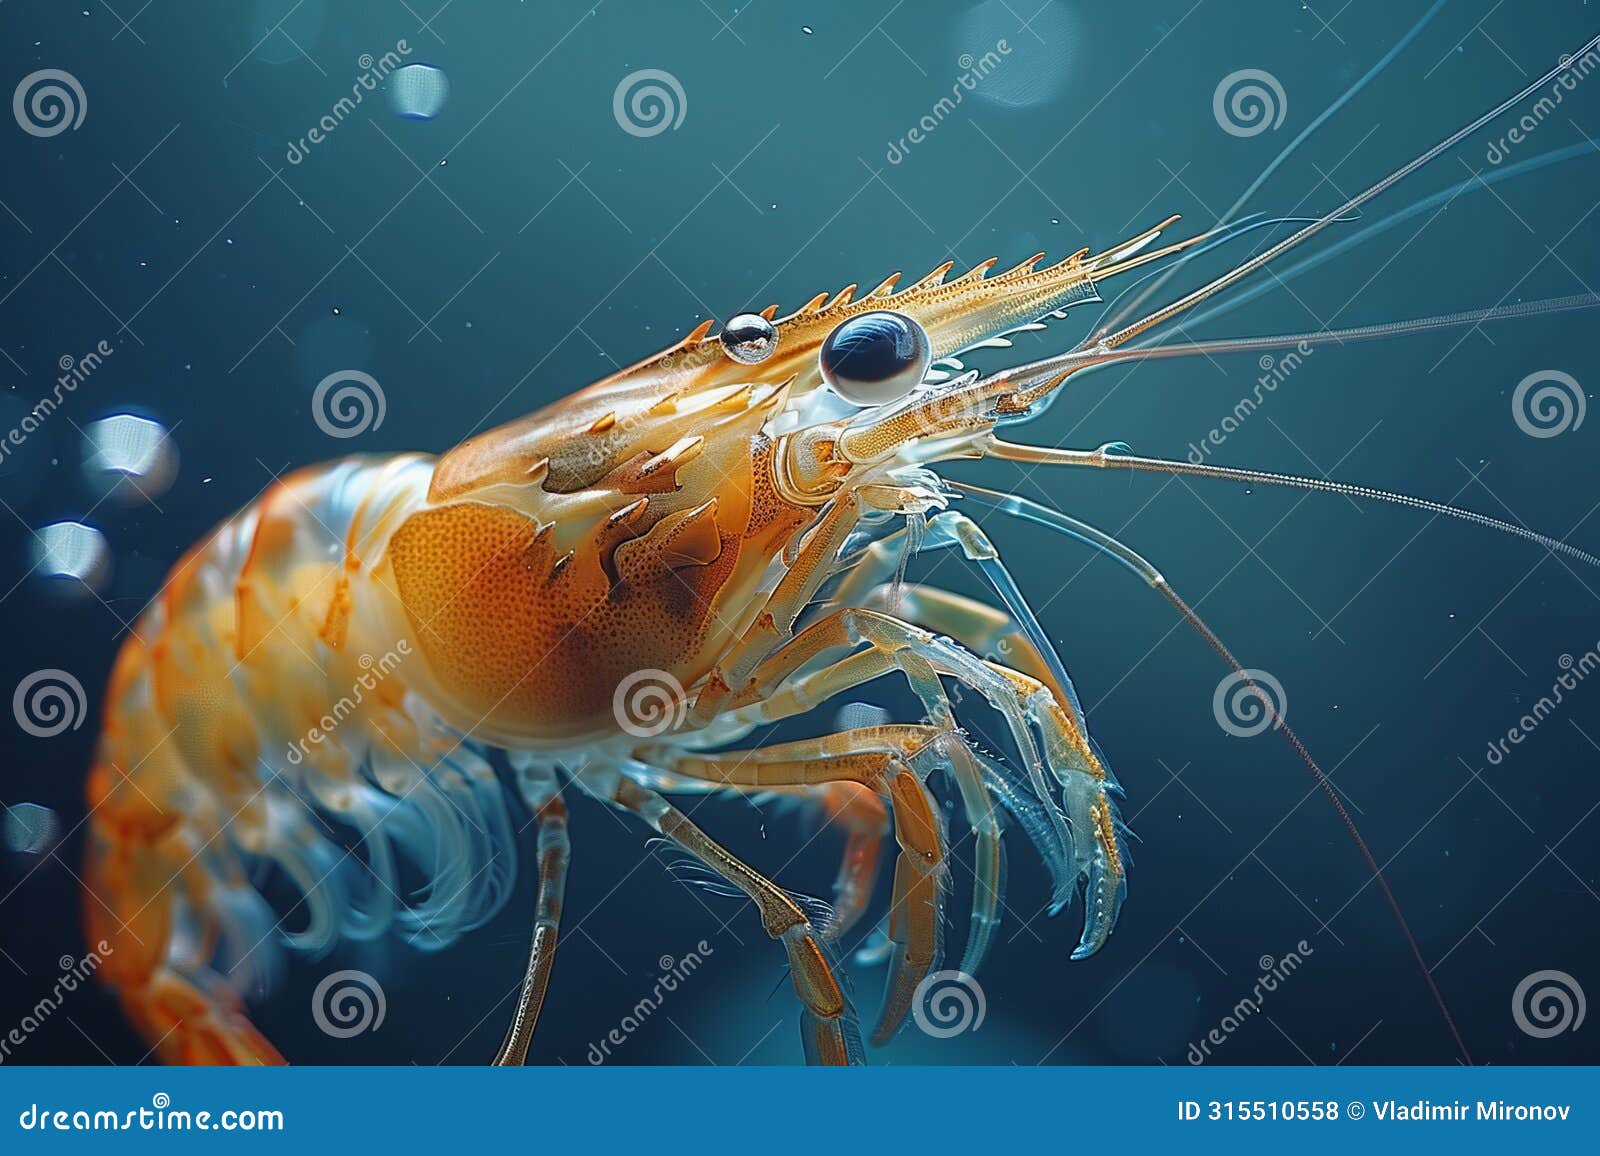 arthropod botan shrimp in electric blue fluid, macro photography